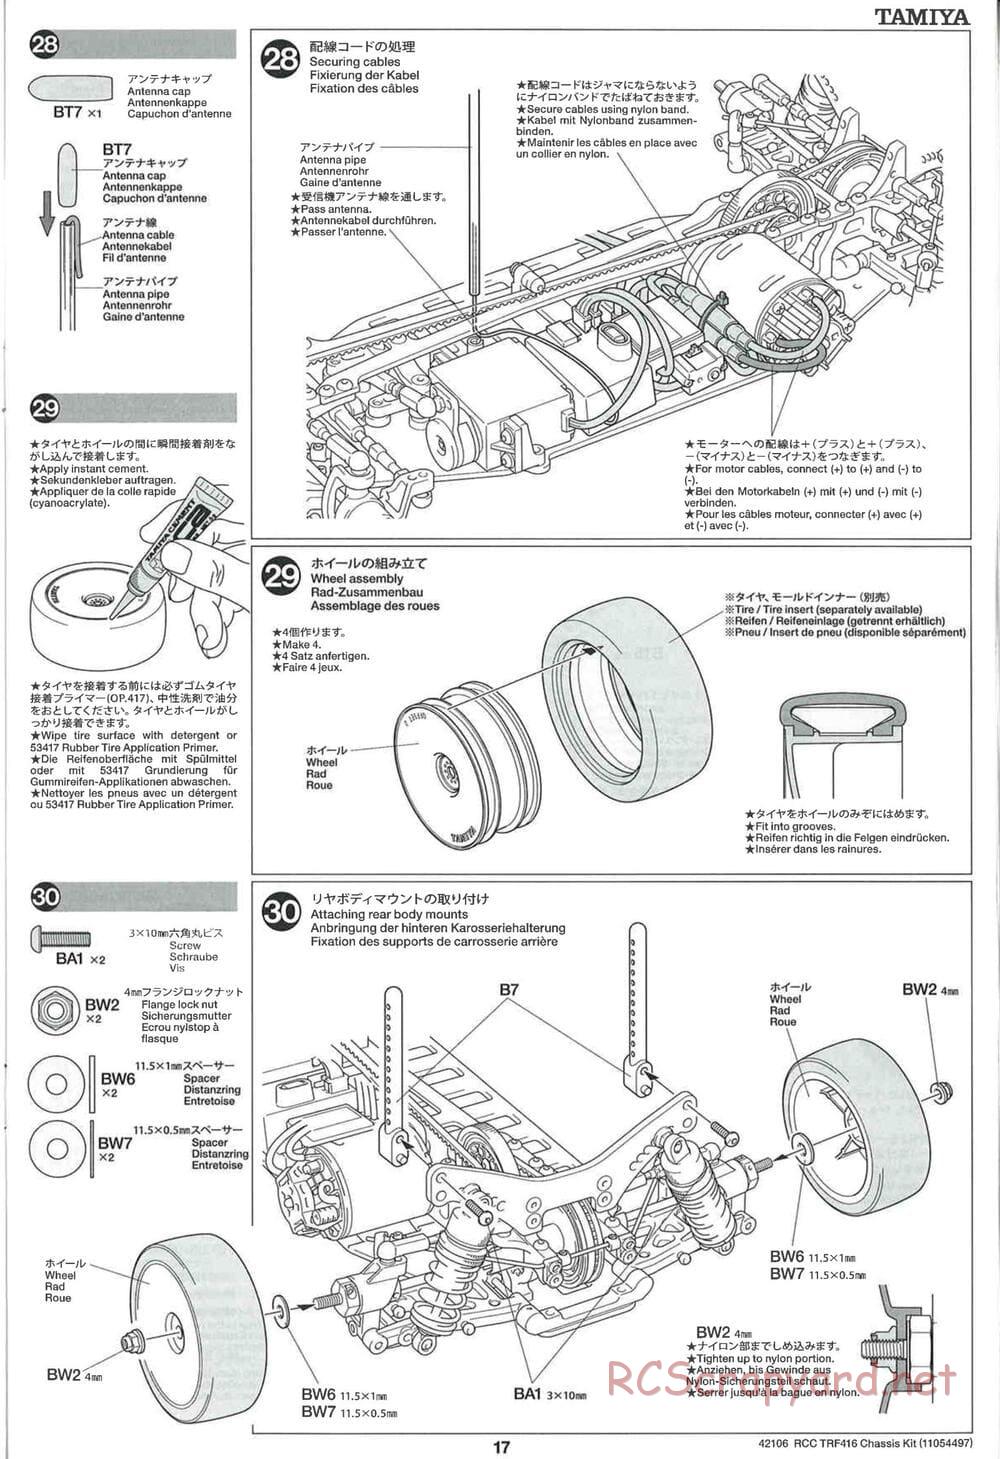 Tamiya - TRF416 Chassis - Manual - Page 17